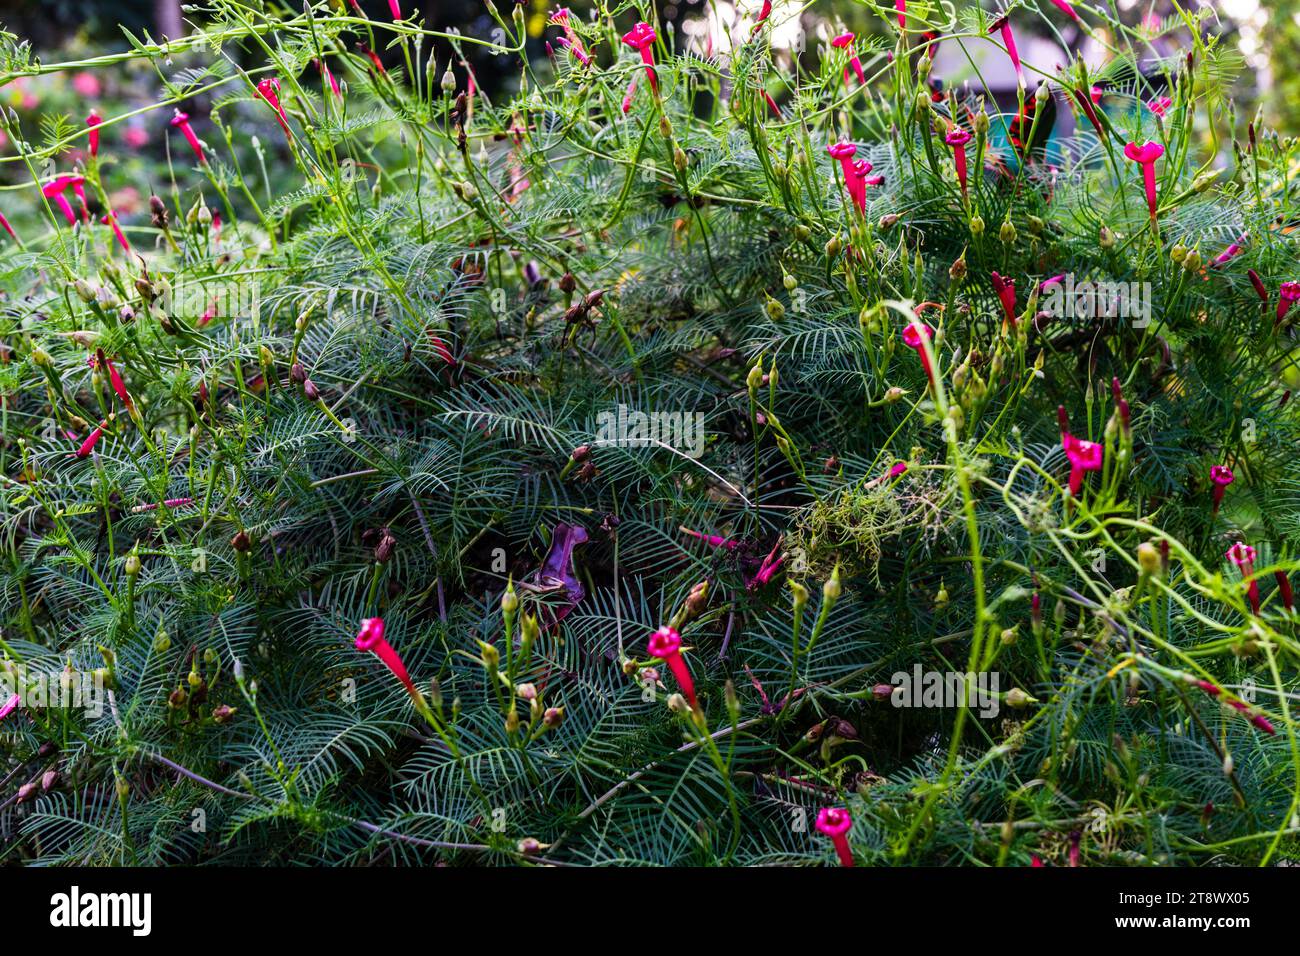 cypress vine, Ipomoea quamoclit is blooming. Selective focus Stock Photo